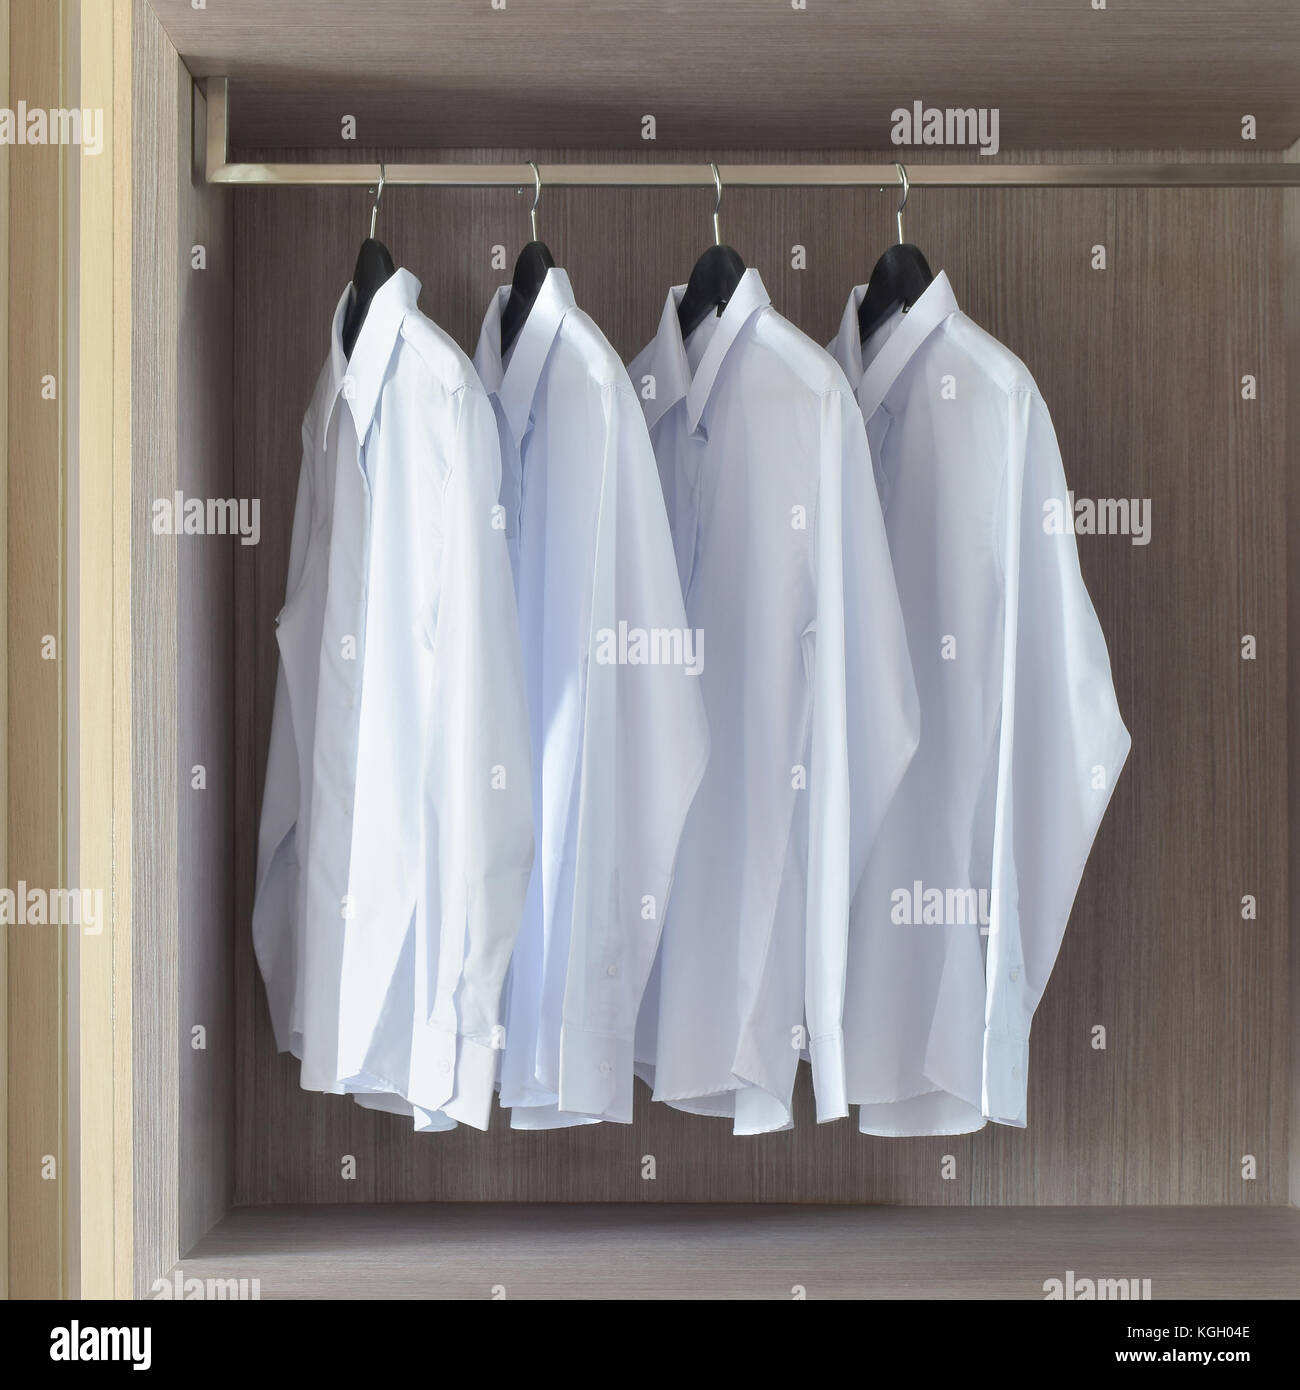 Classic white shirts in warm wooden wardrobe Stock Photo